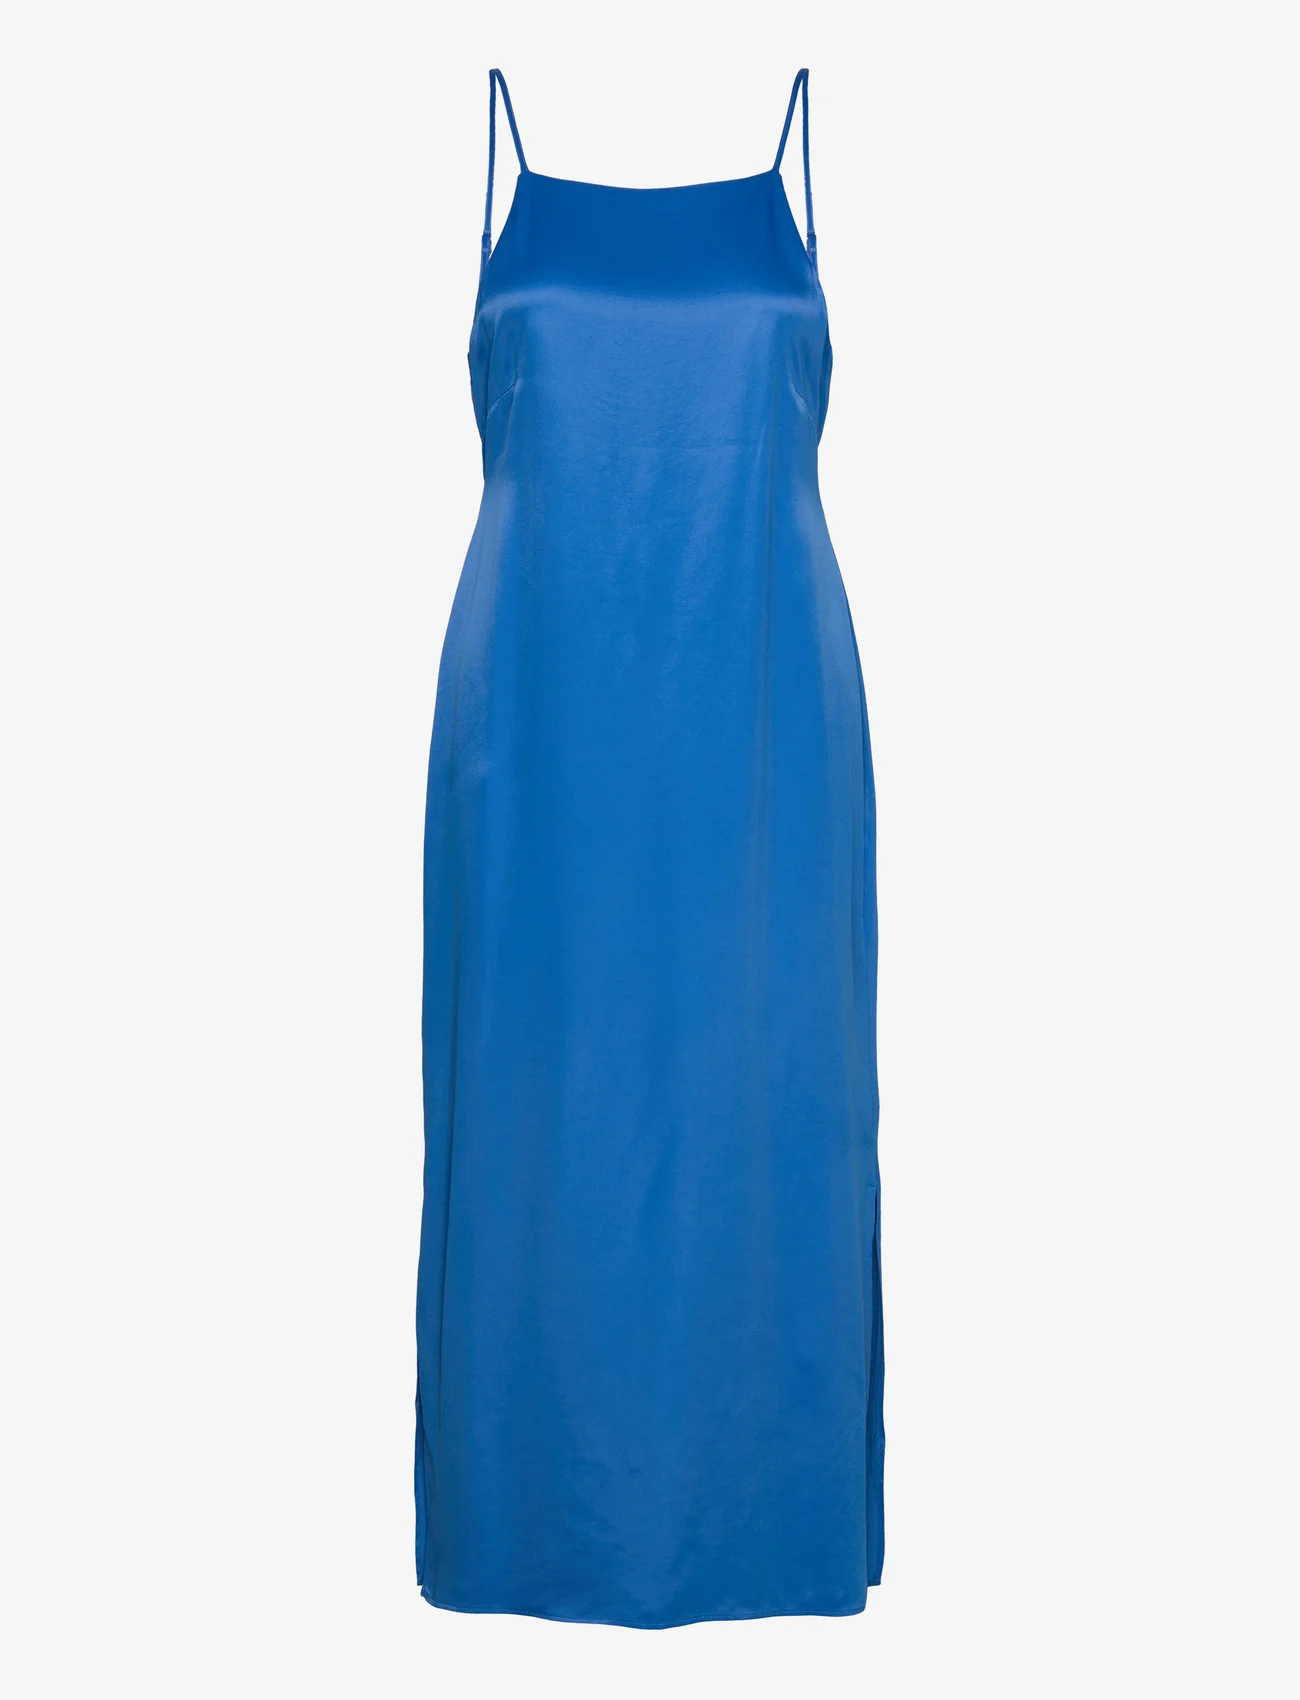 NORR - Portia maxi strap dress - slip dresses - strong blue - 0